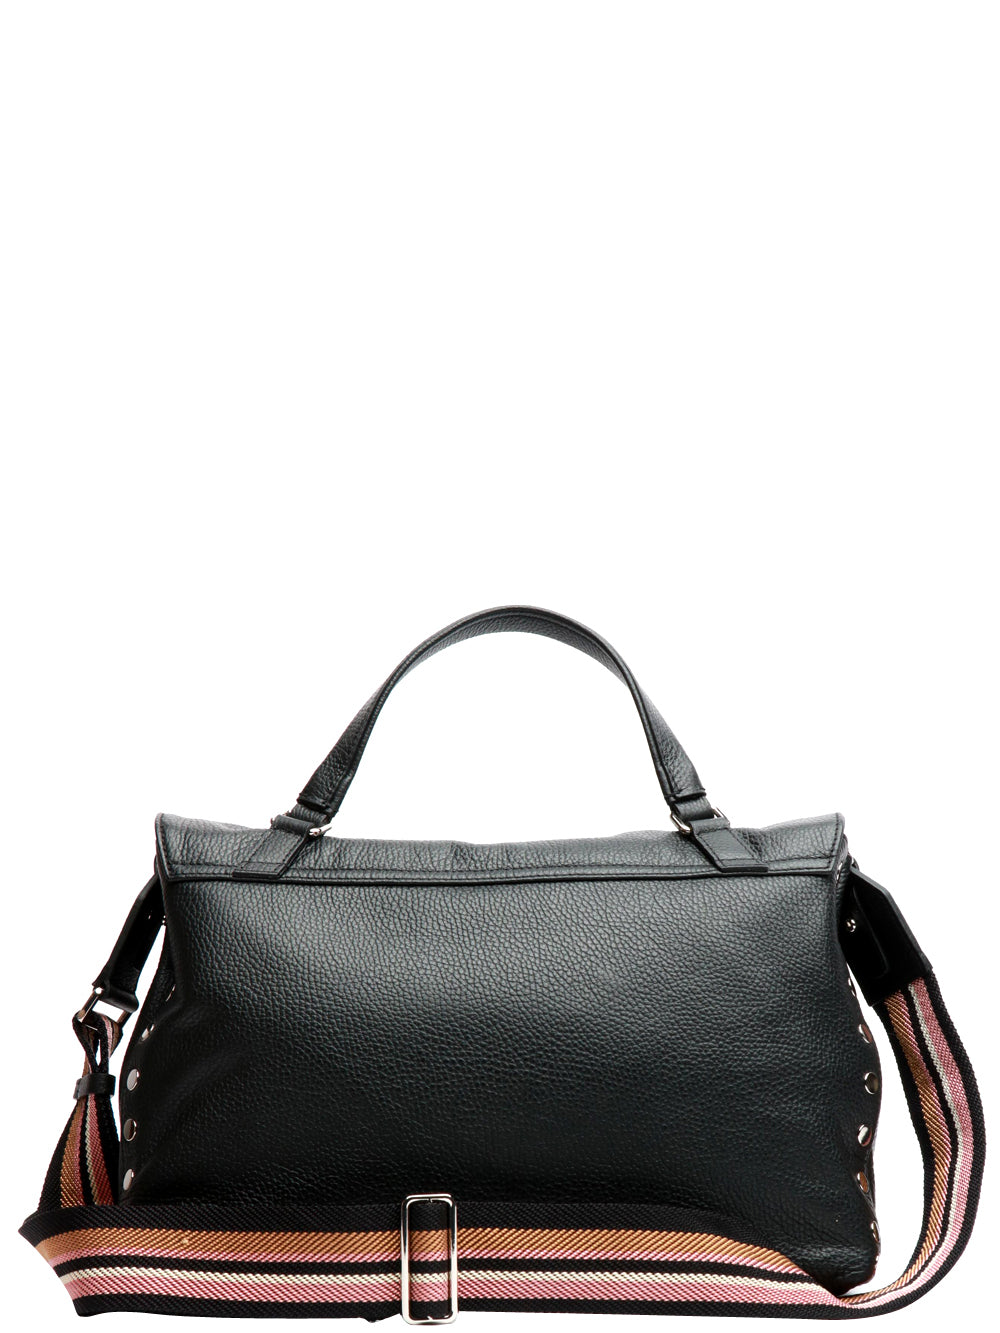 Postina Daily Medium Handbag in Black Leather with Shoulder Strap